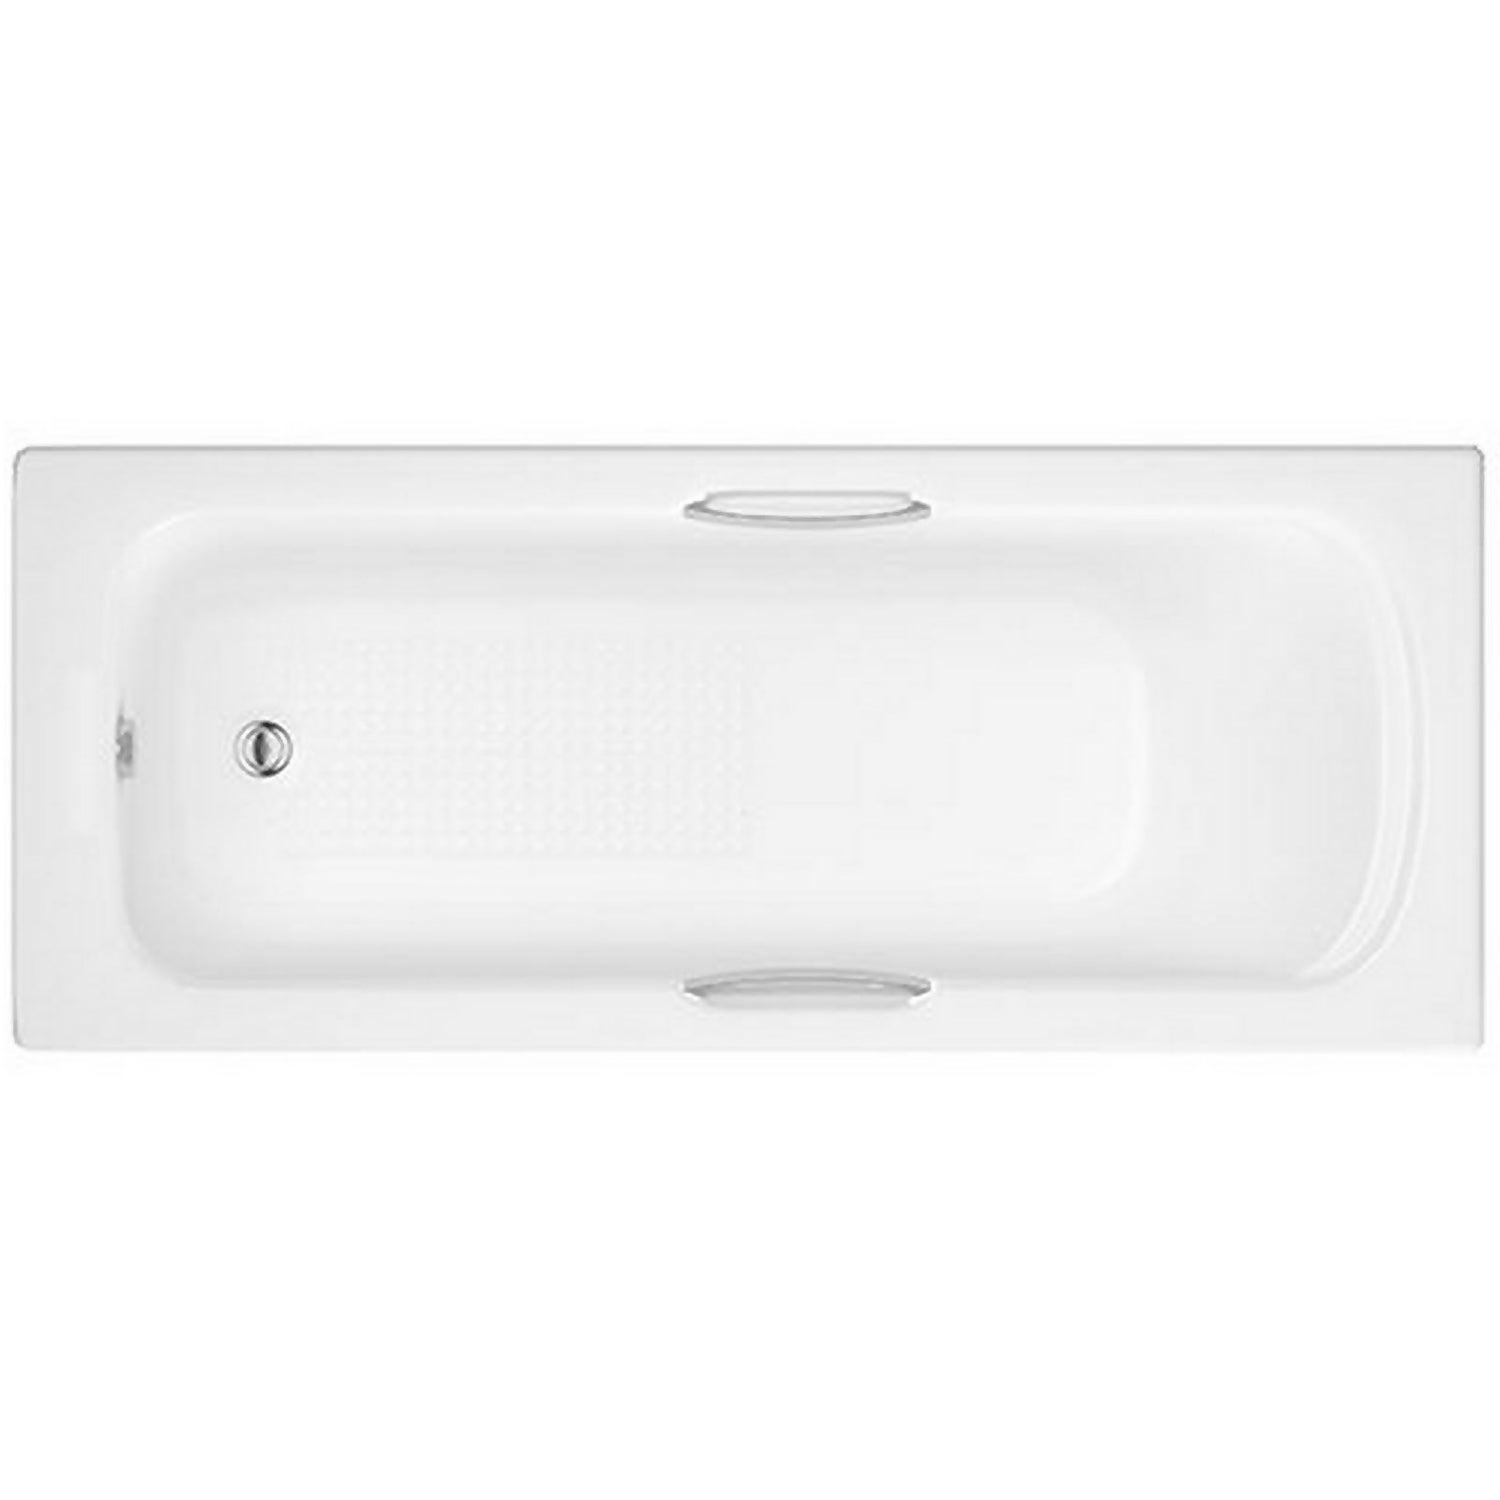 Claro White Straight Bath with Grips - 1500 x 700mm